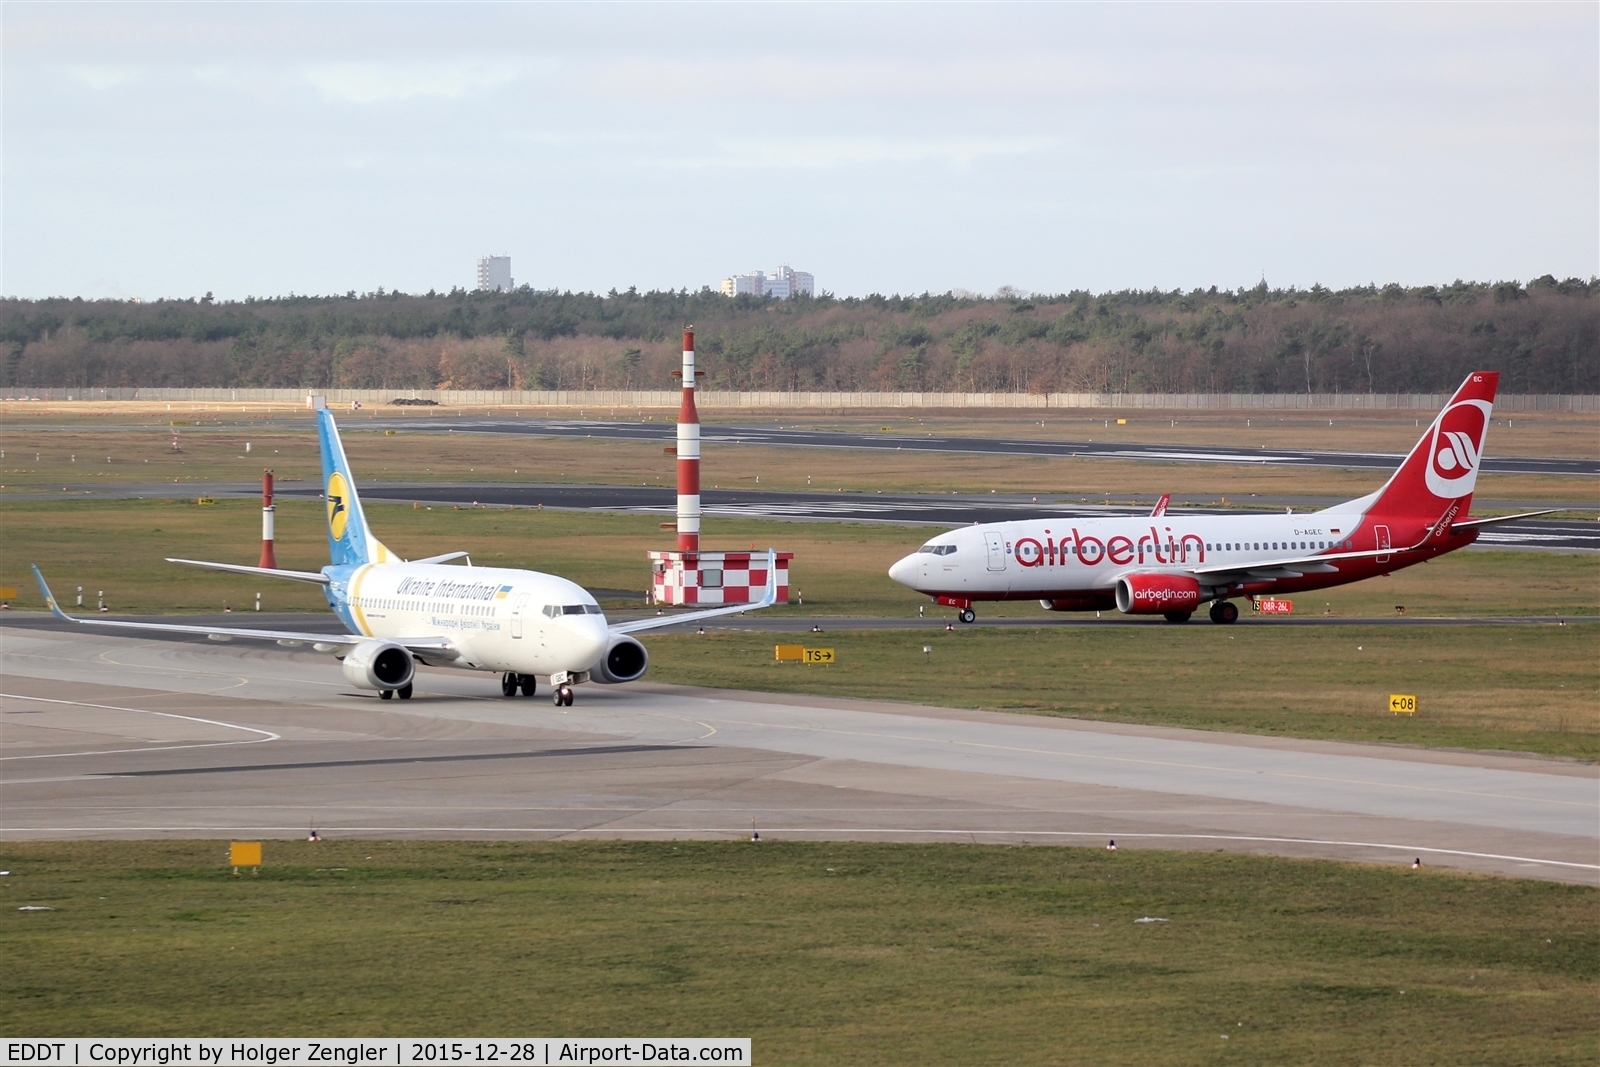 Tegel International Airport (closing in 2011), Berlin Germany (EDDT) - Inbound traffic from rwy 26R....